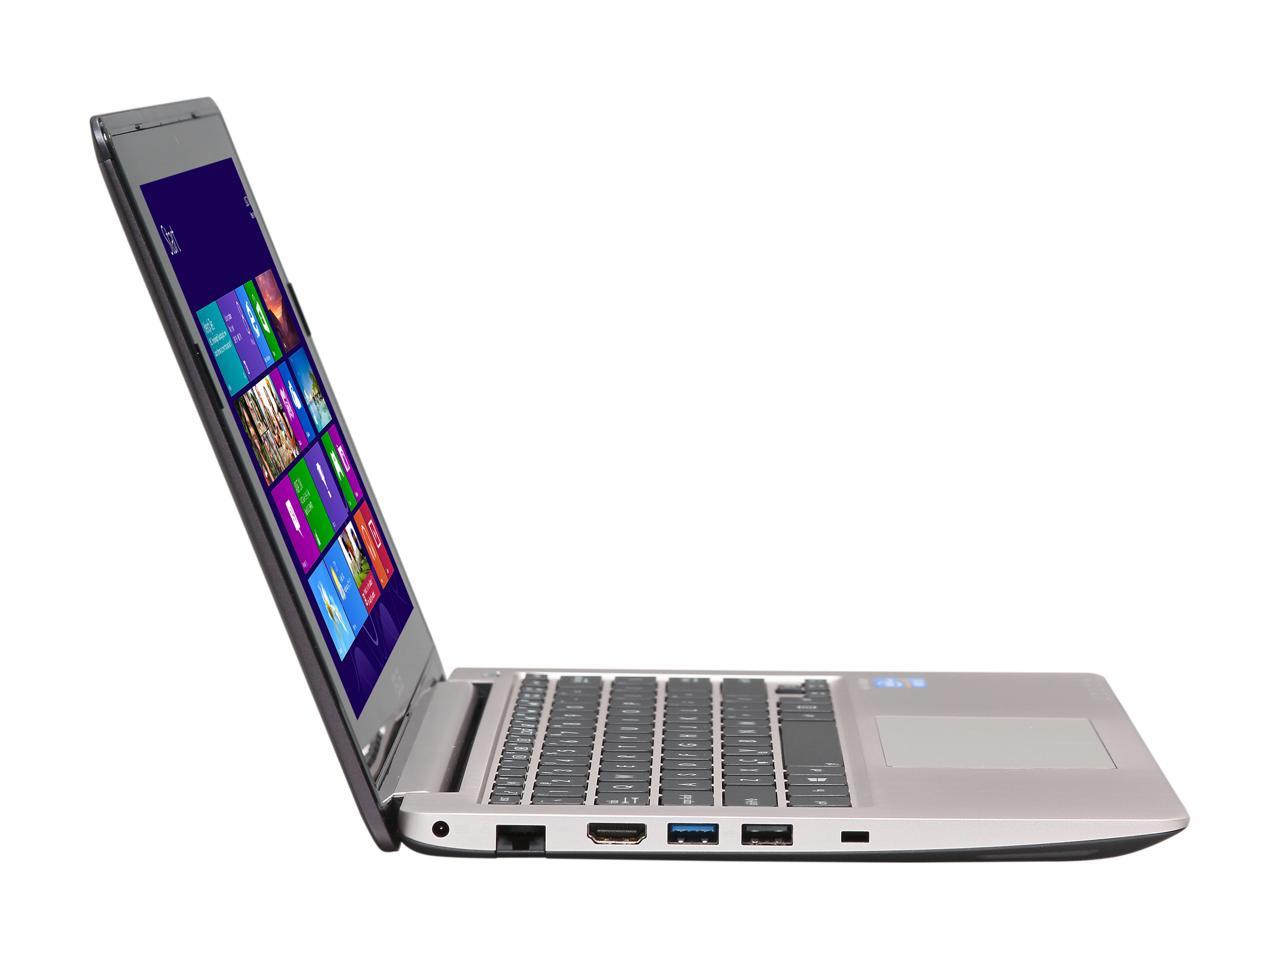 ASUS Laptop VivoBook X202E-DH31T Intel Core i3 3rd Gen 3217U 